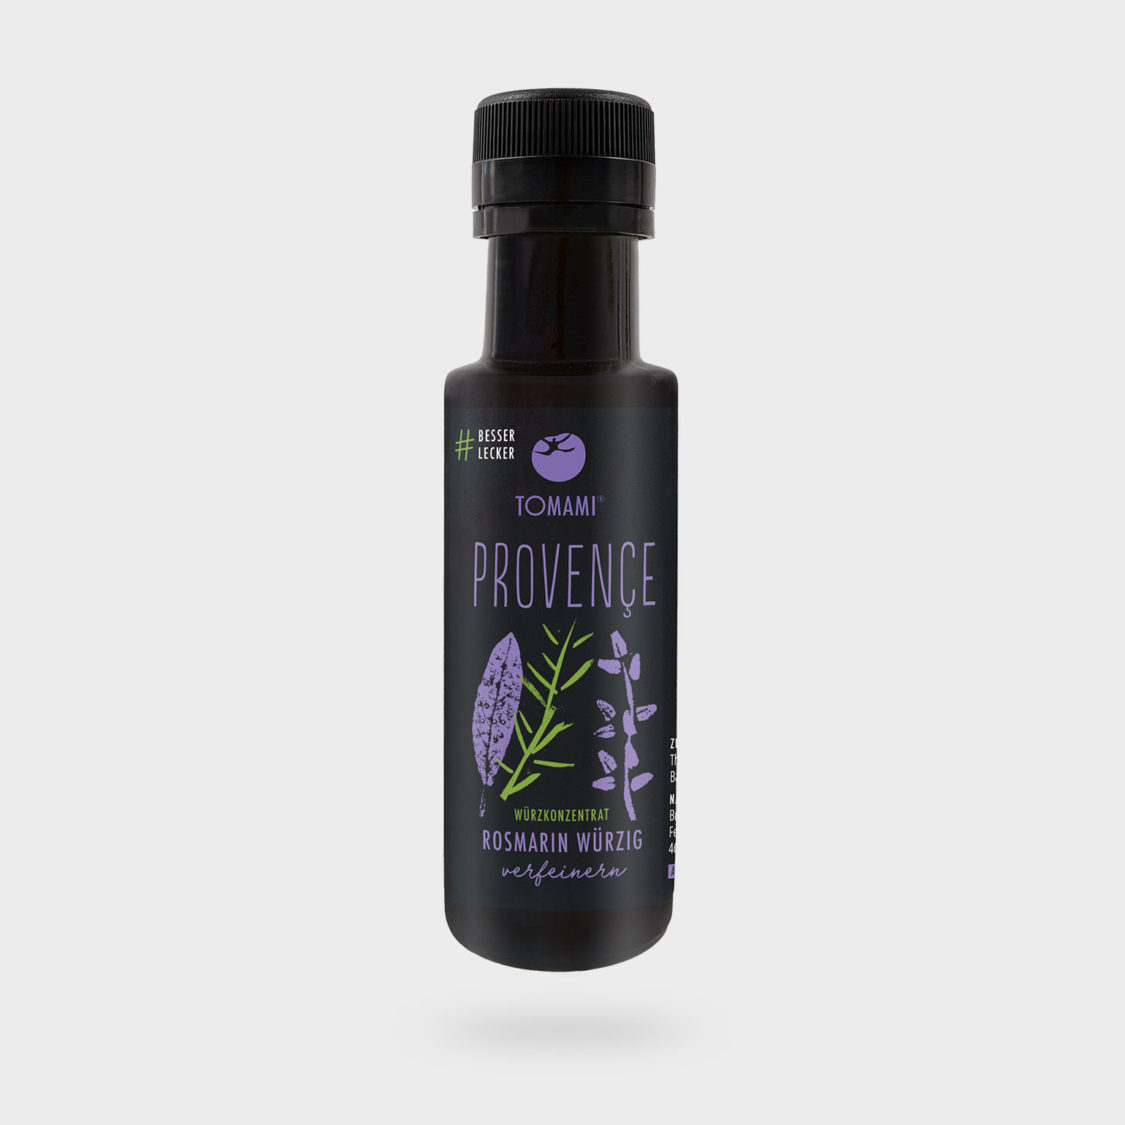 TOMAMI Provence 90 ml